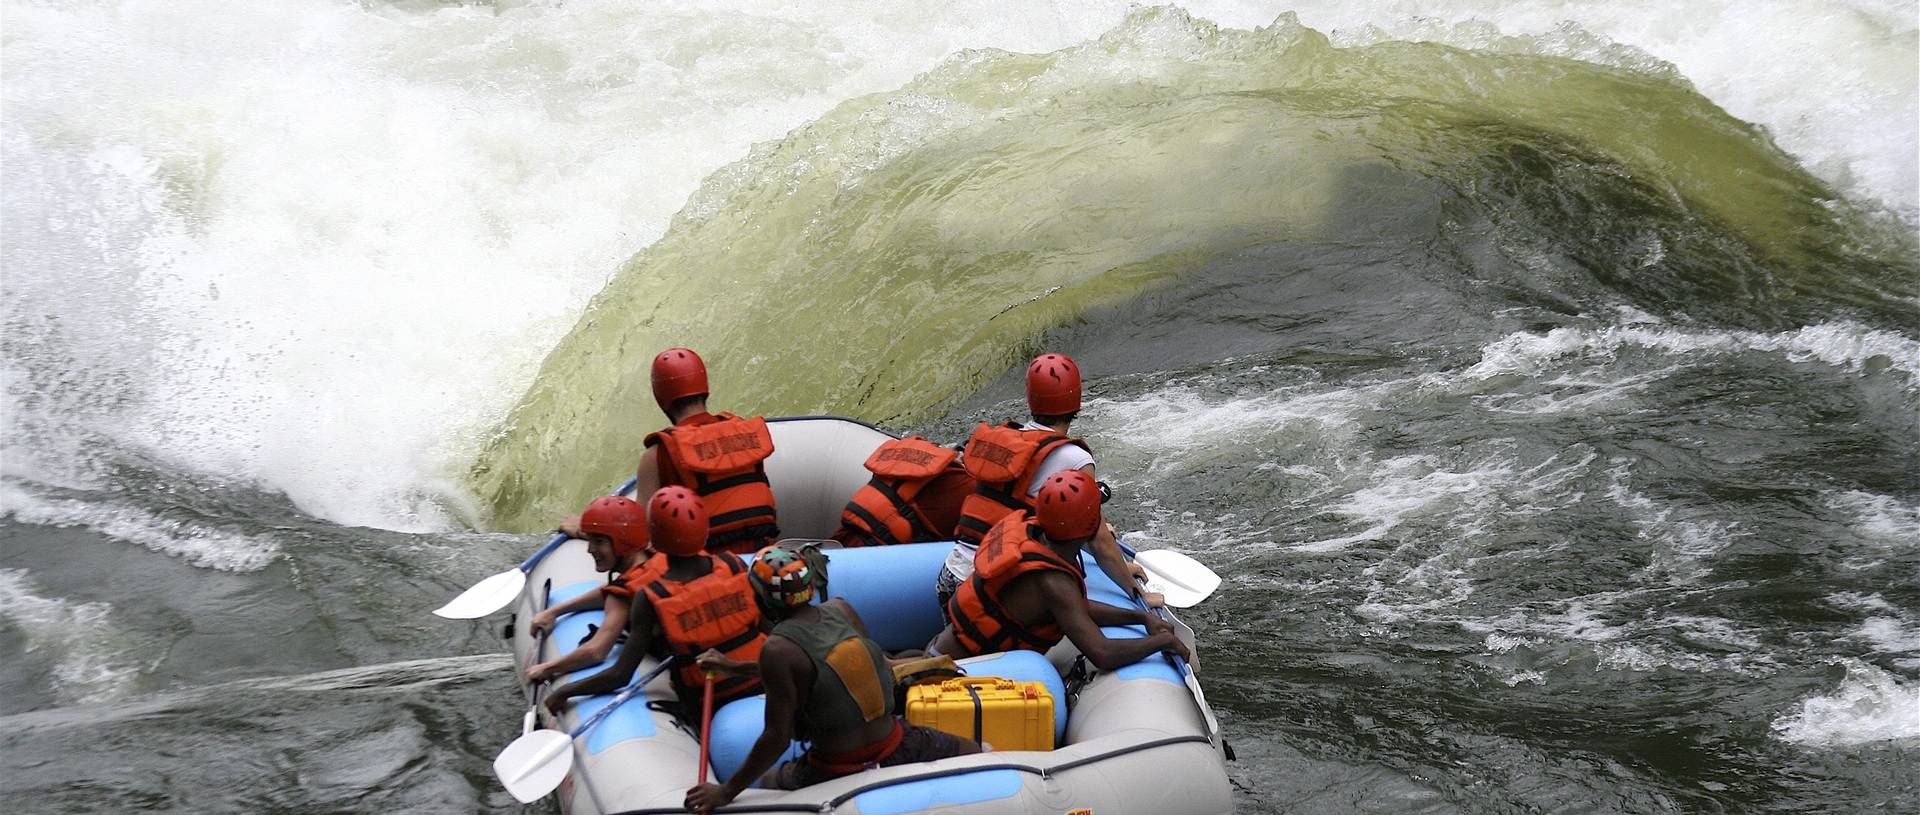 Victoria Falls Rafting